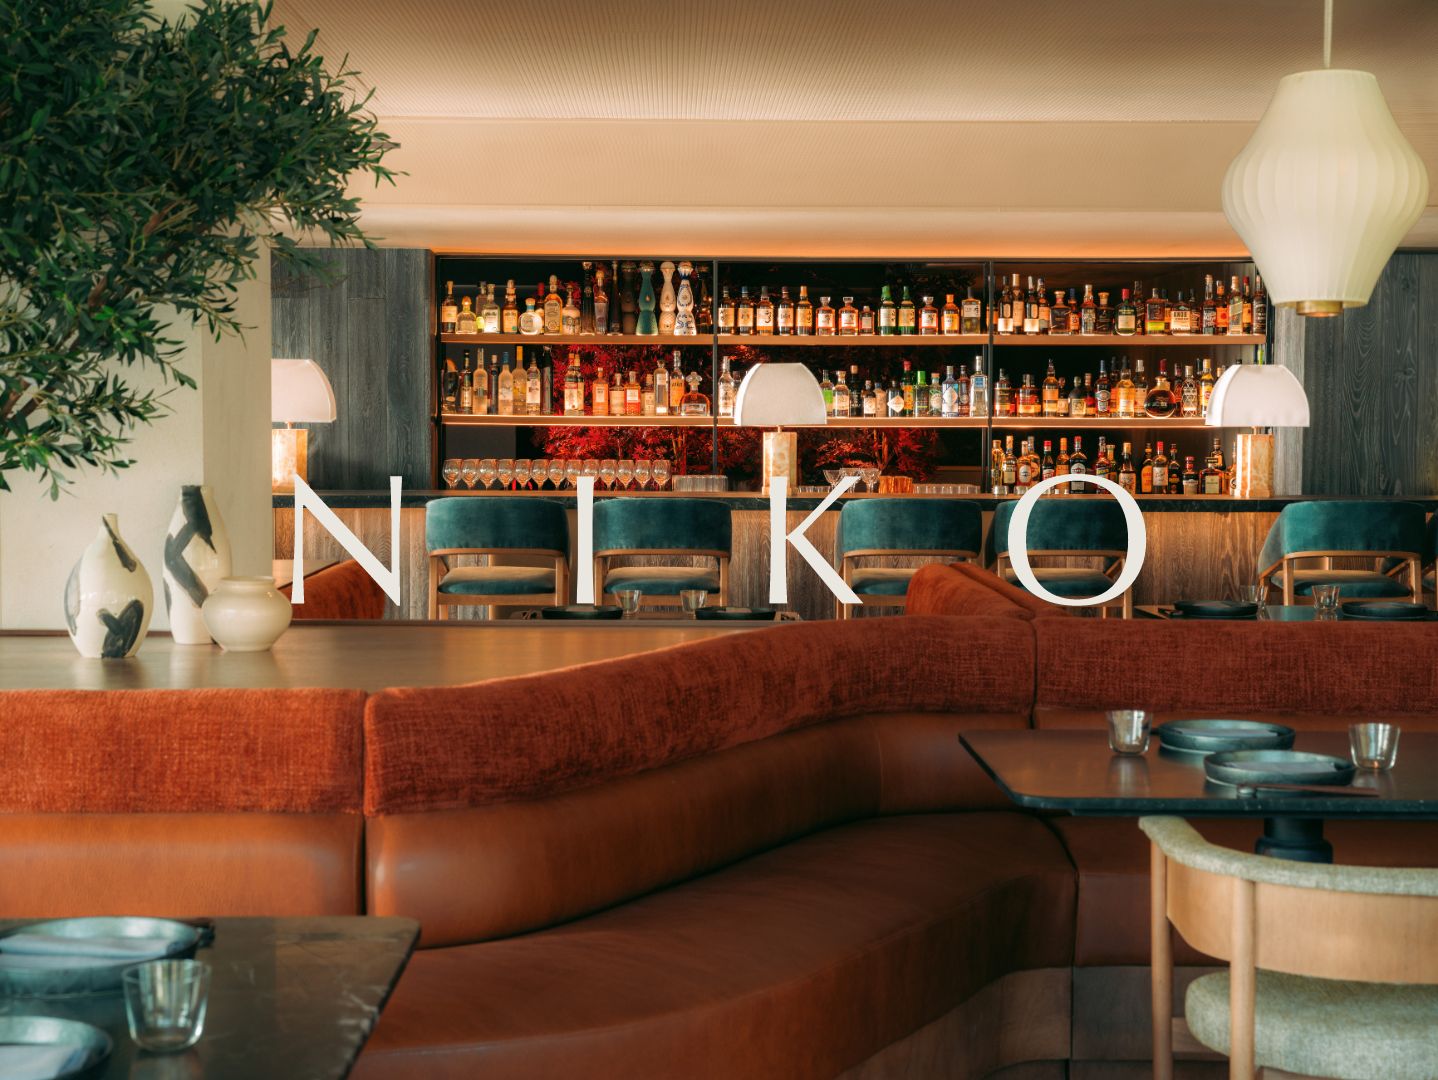 Restaurant interior with Niko logo on top